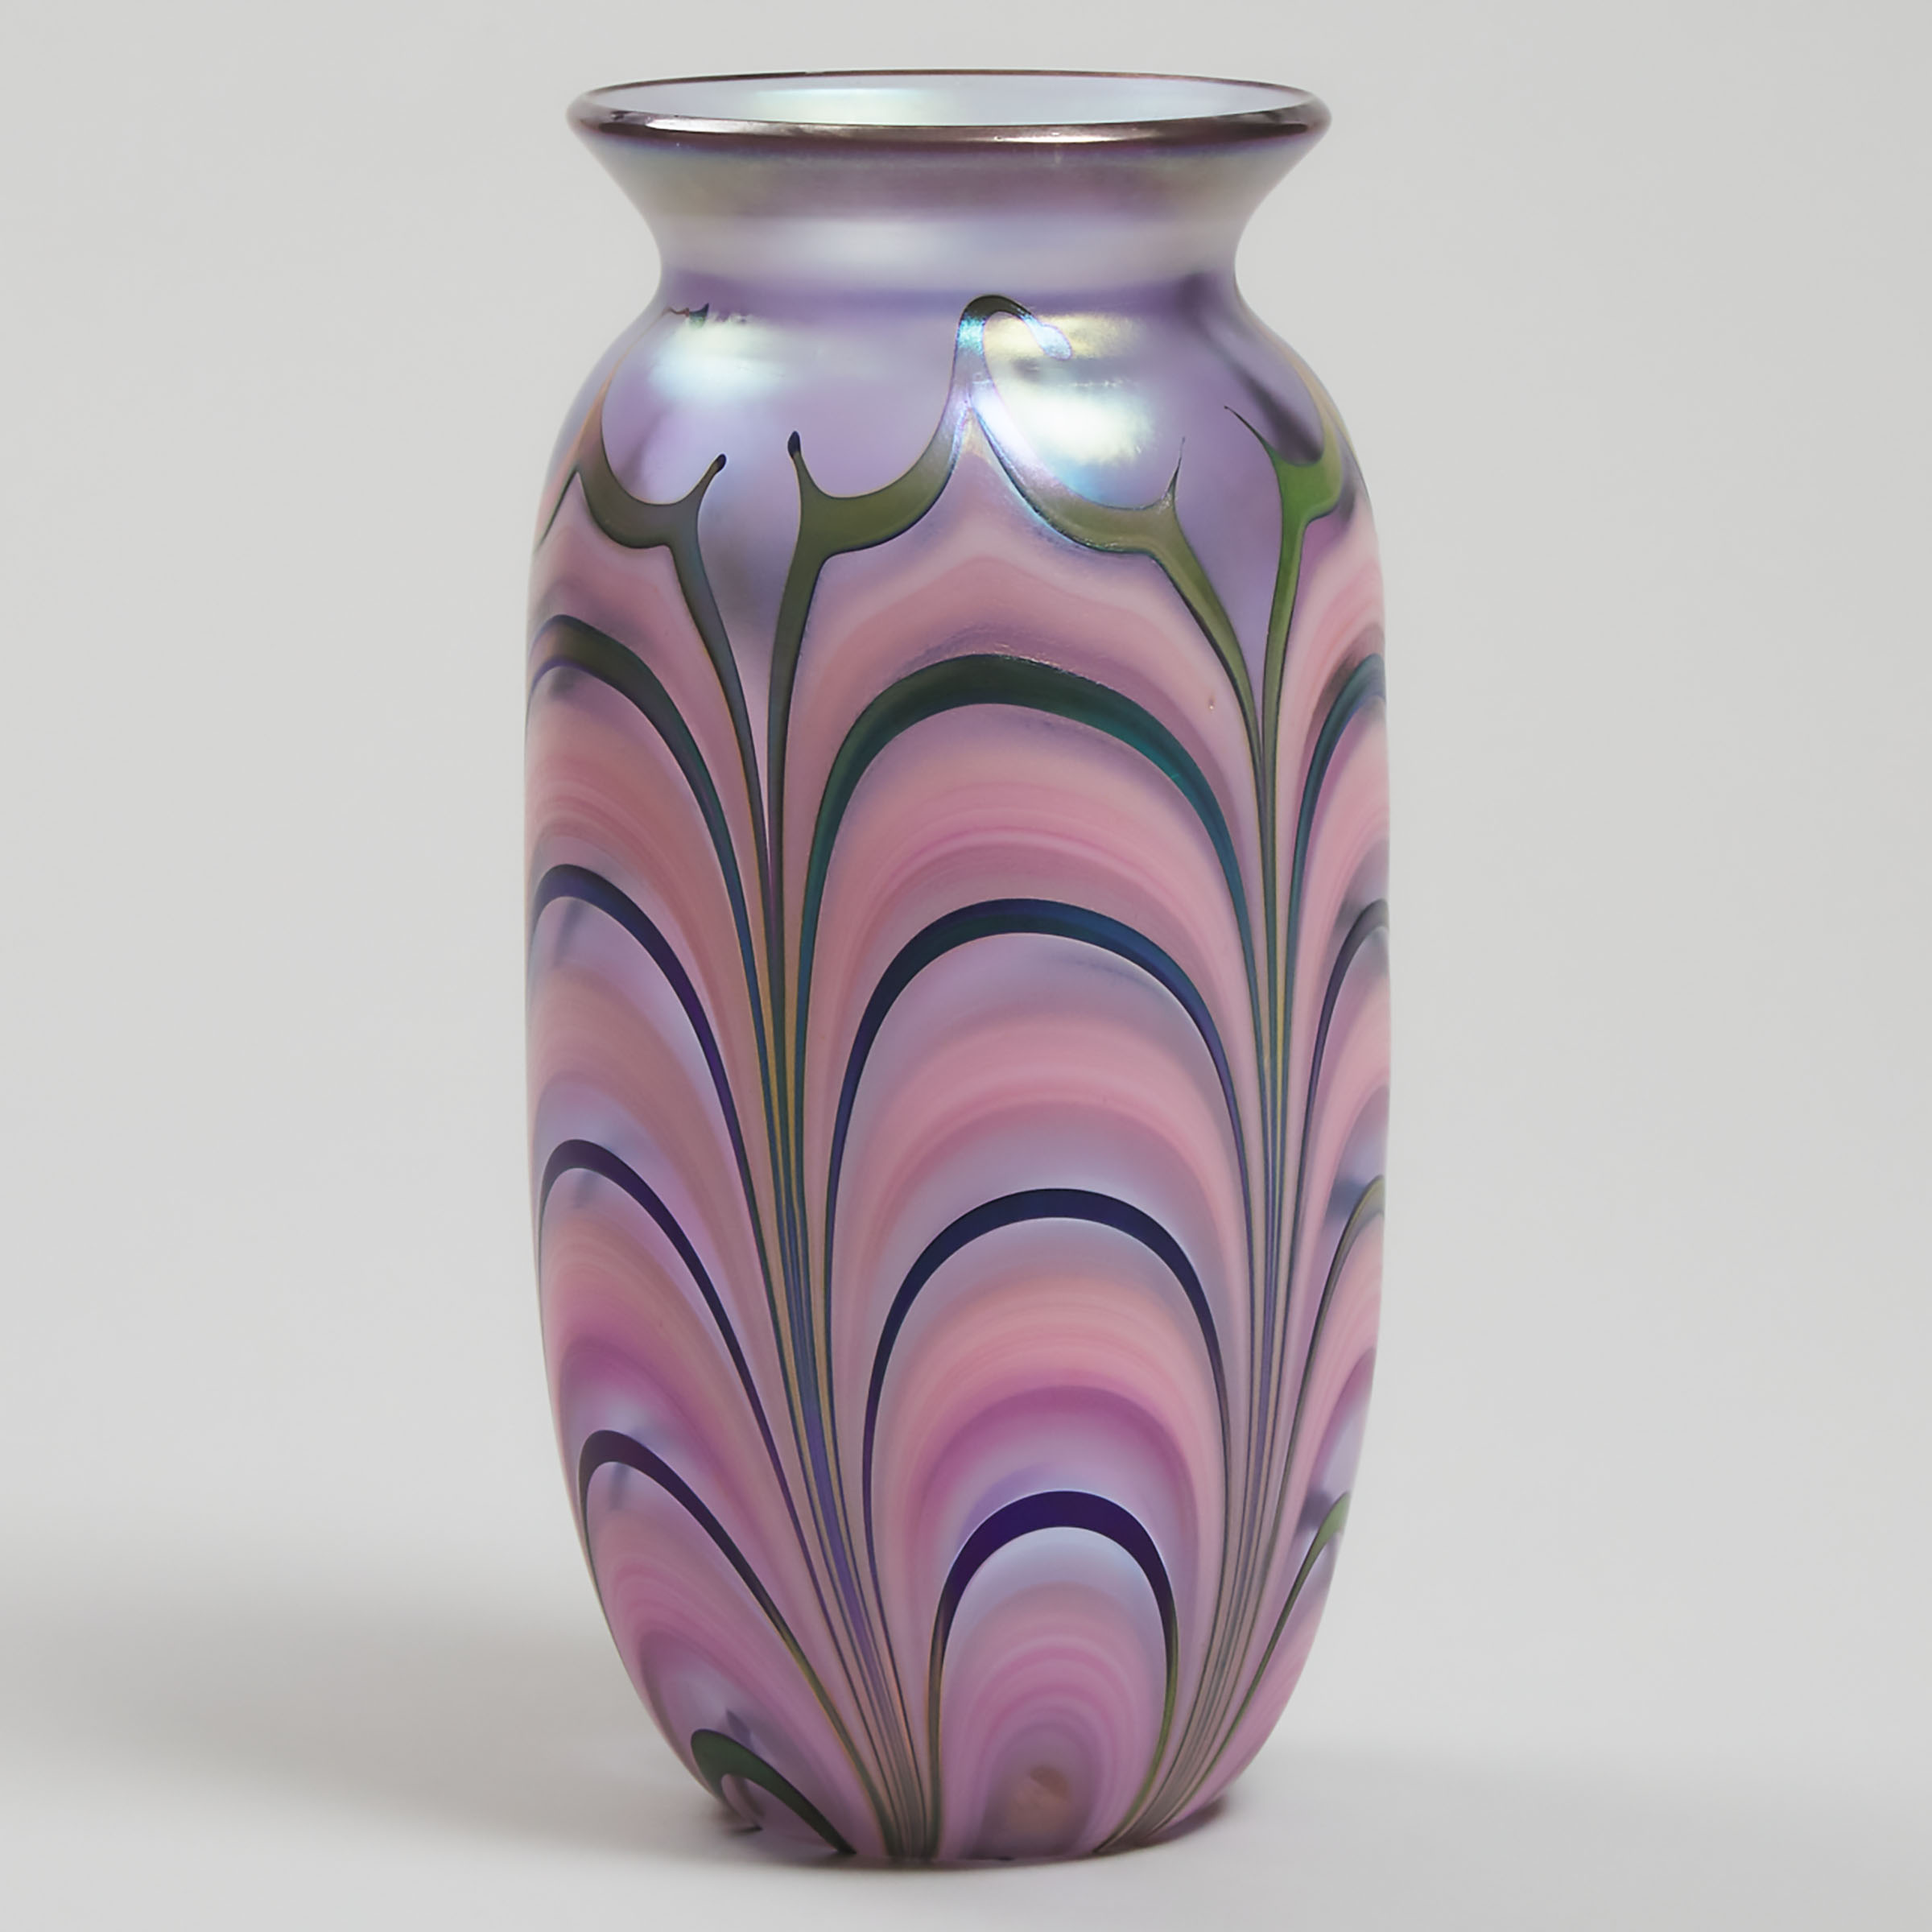 John Lotton (American, b.1964), Iridescent Glass Vase, 1990